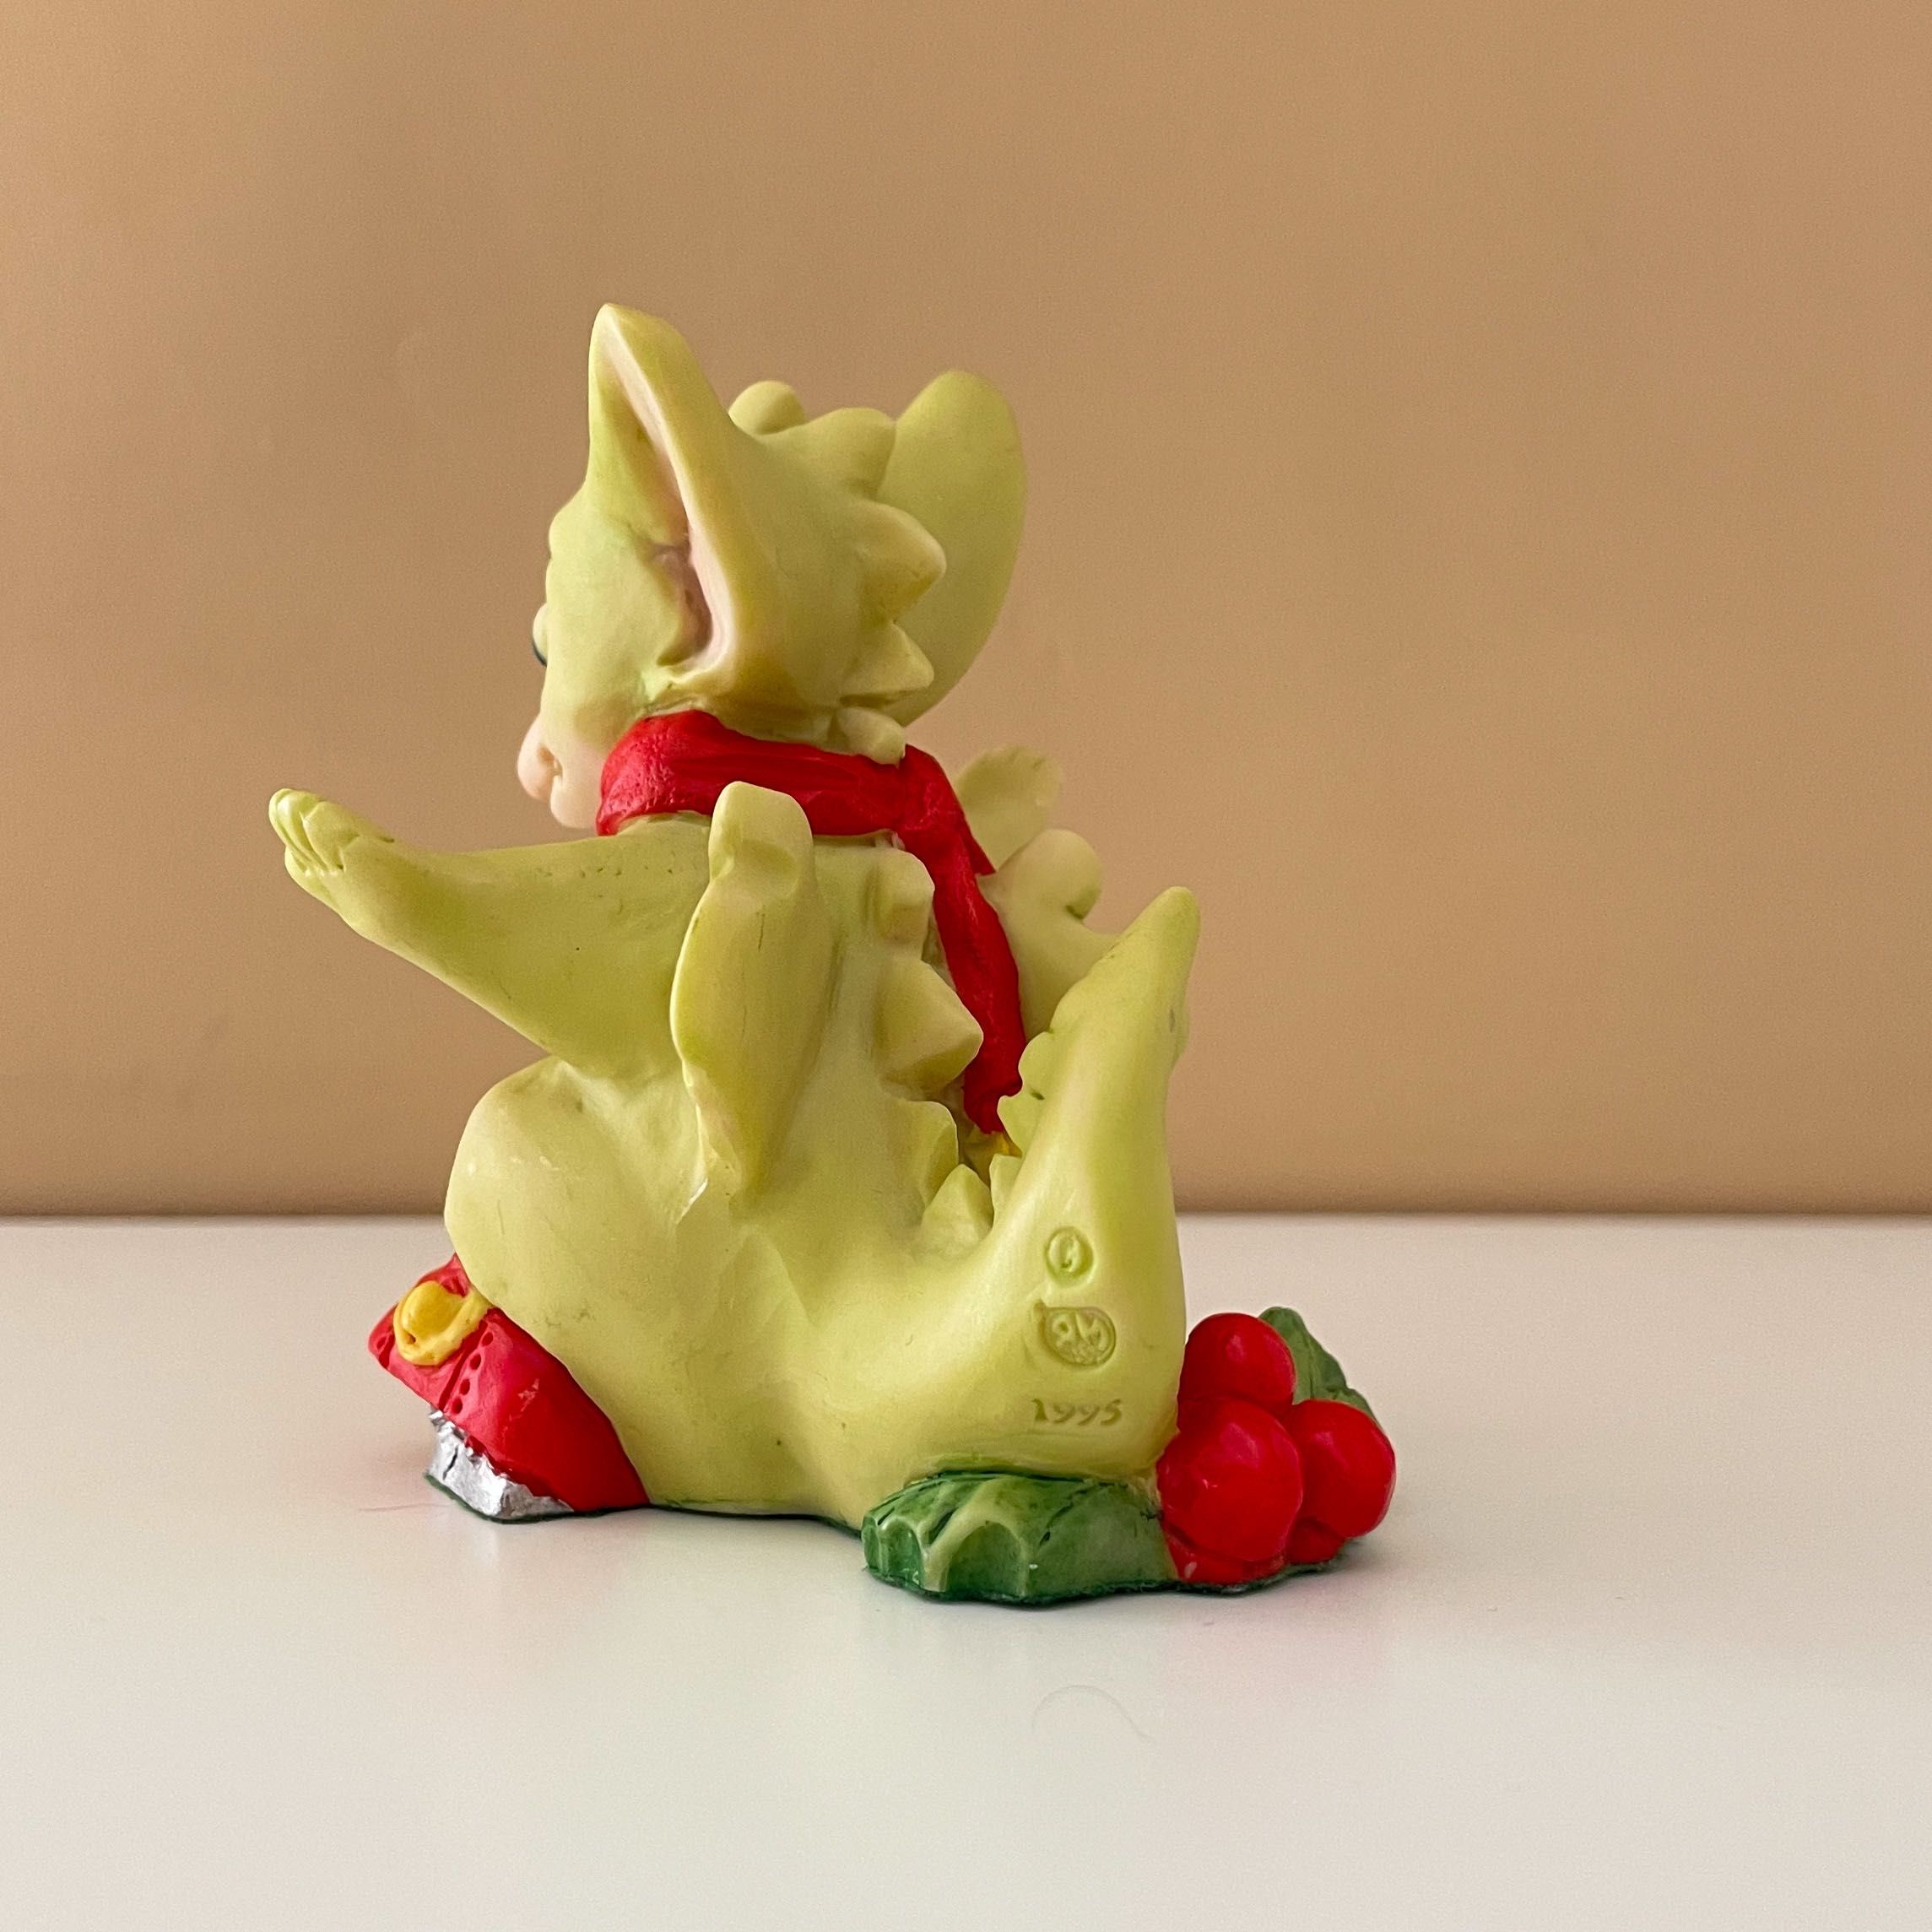 Figurka Whimsical World of Pocket Dragons - „Christmas Skates”, 1995